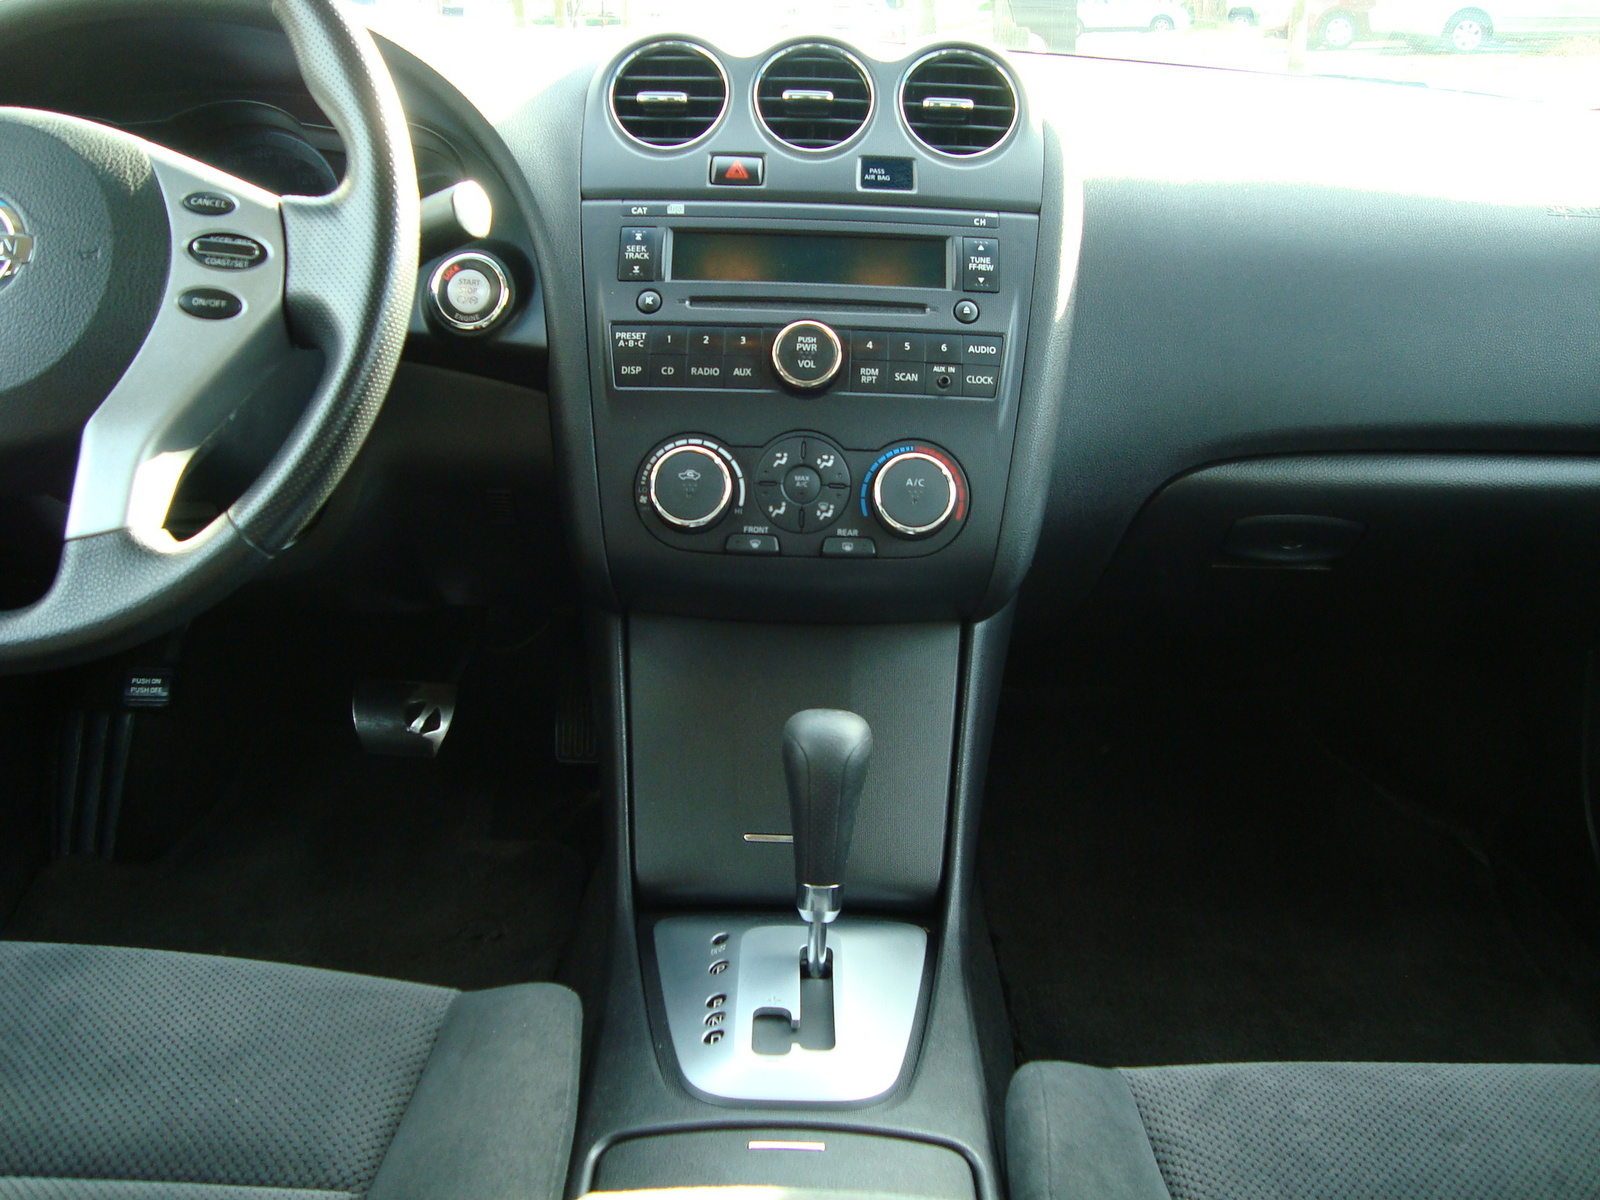 2007 Nissan altima interior specs #9